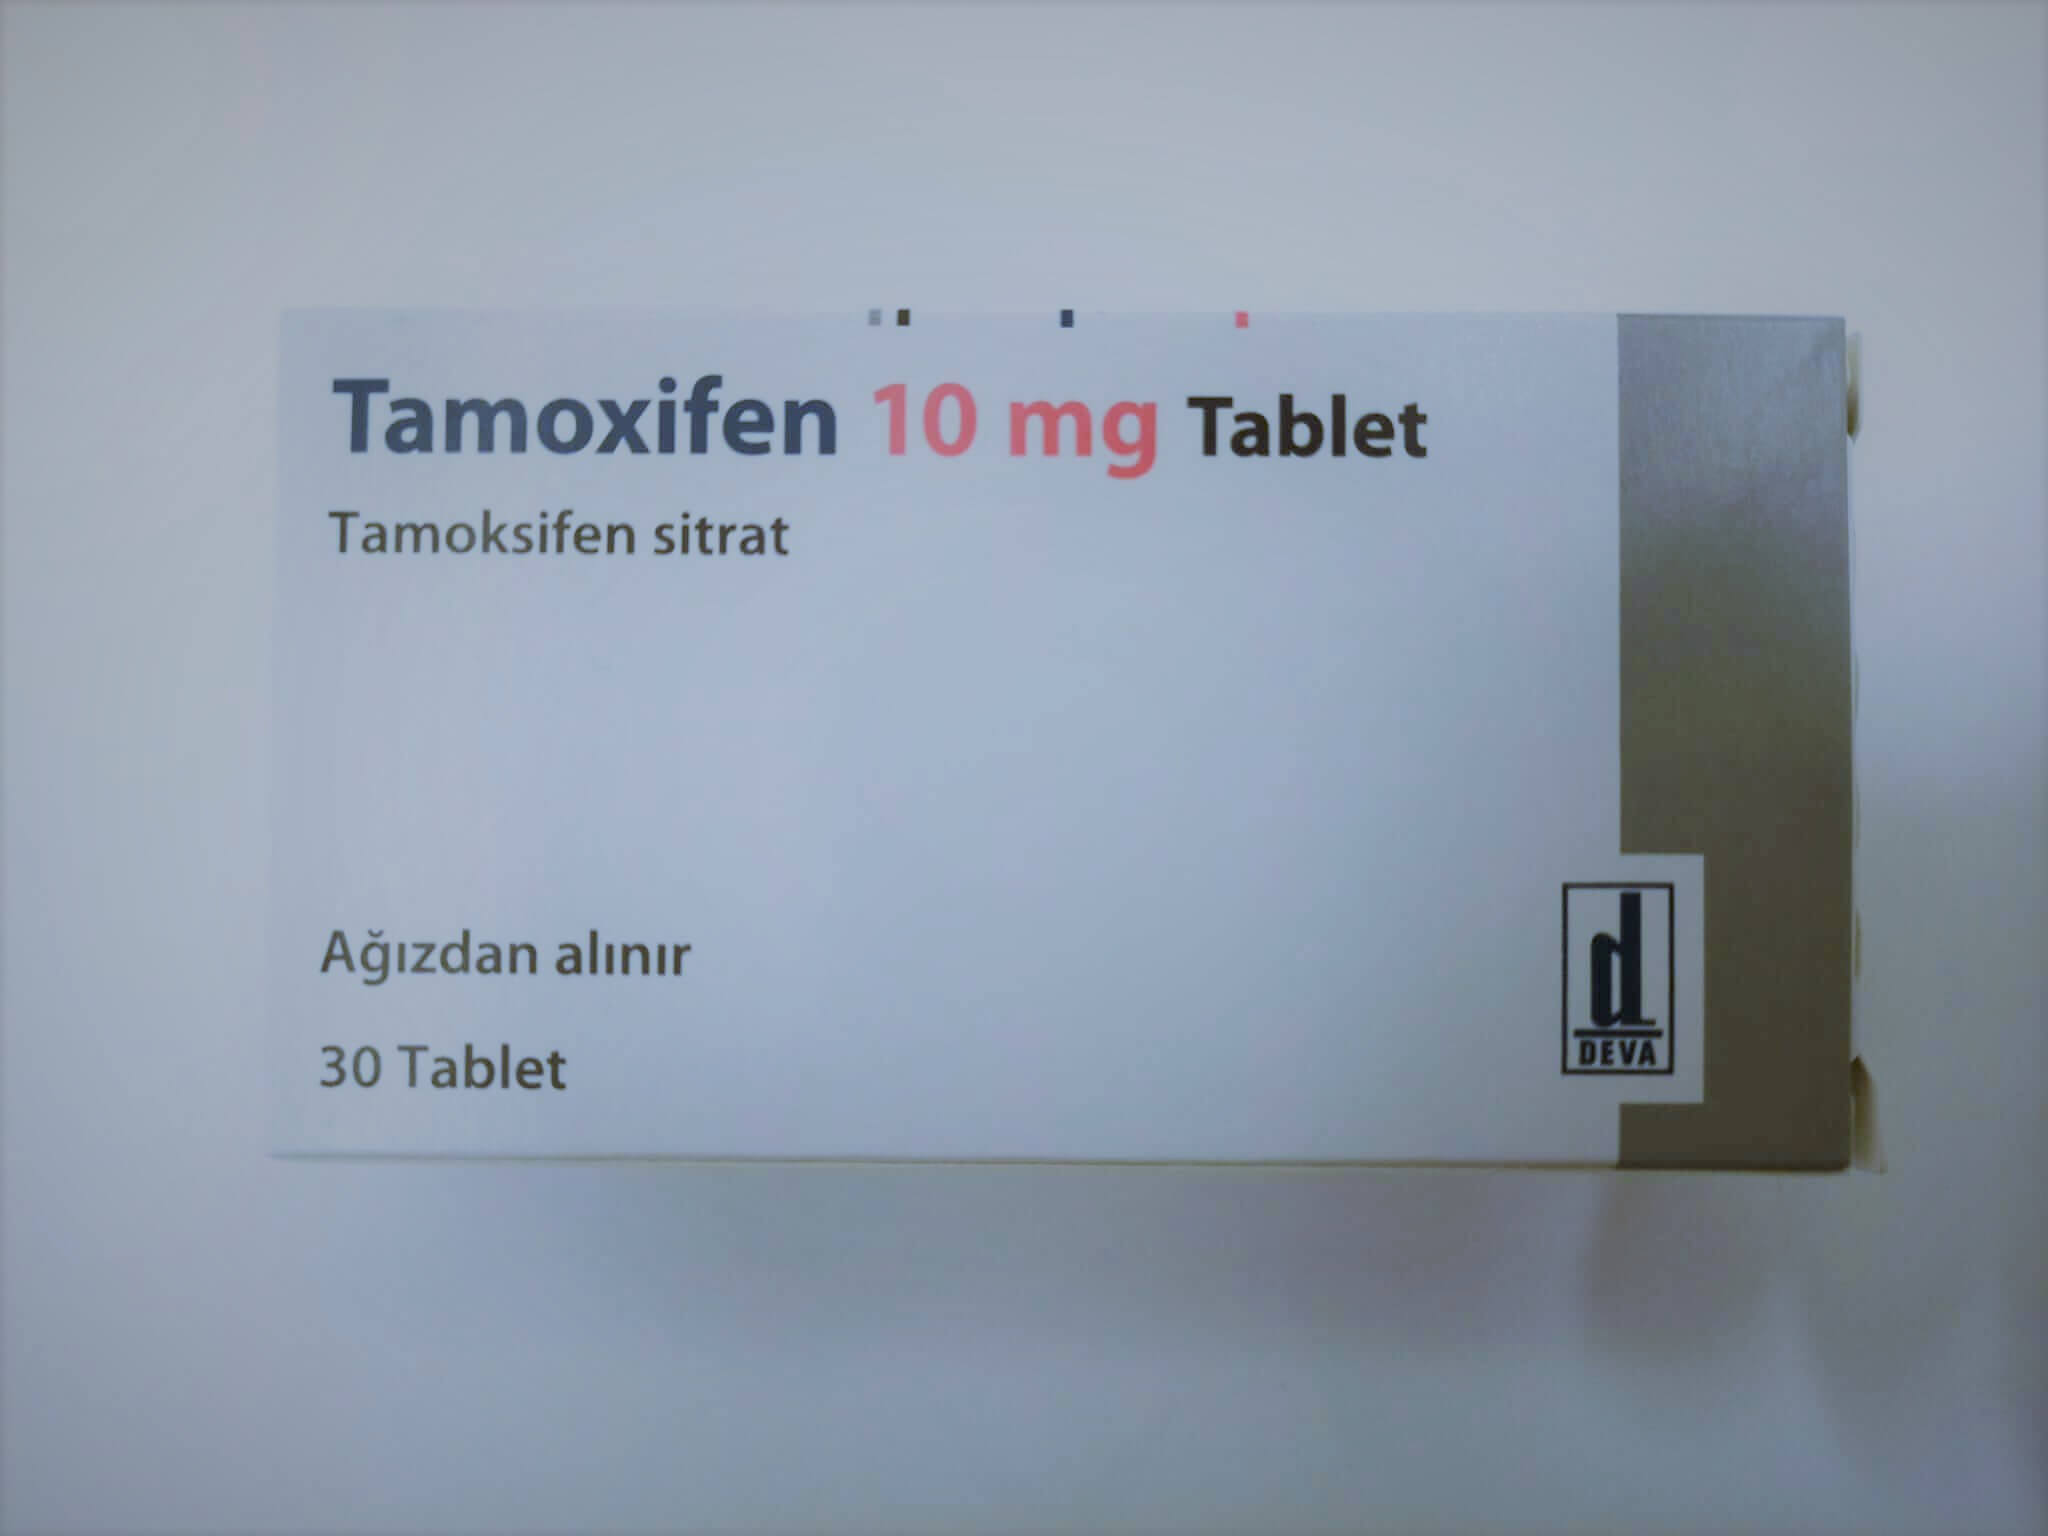 tamoxifen 10 mg 30 tabs (tamoxifen citrate)